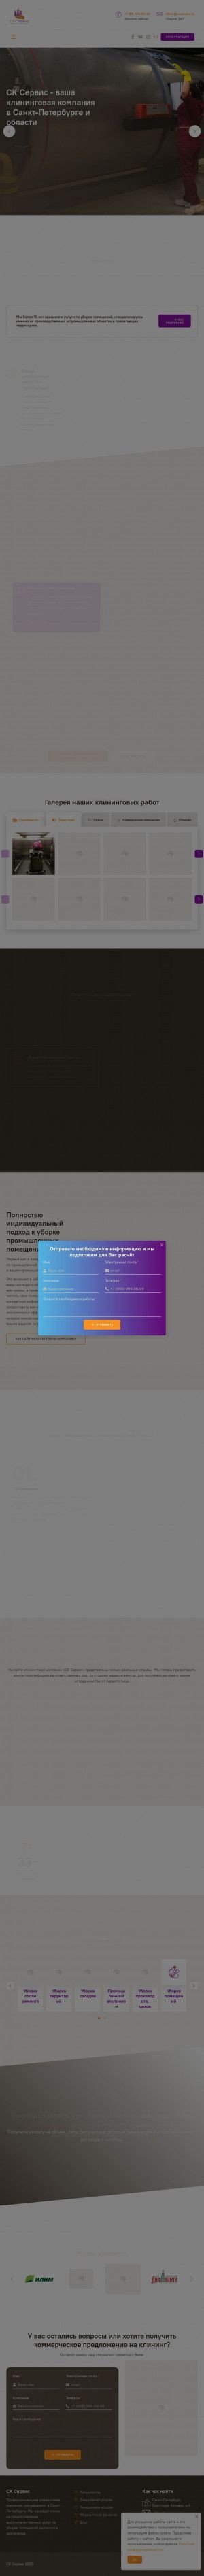 Предпросмотр для www.scservice.ru — СК Сервис